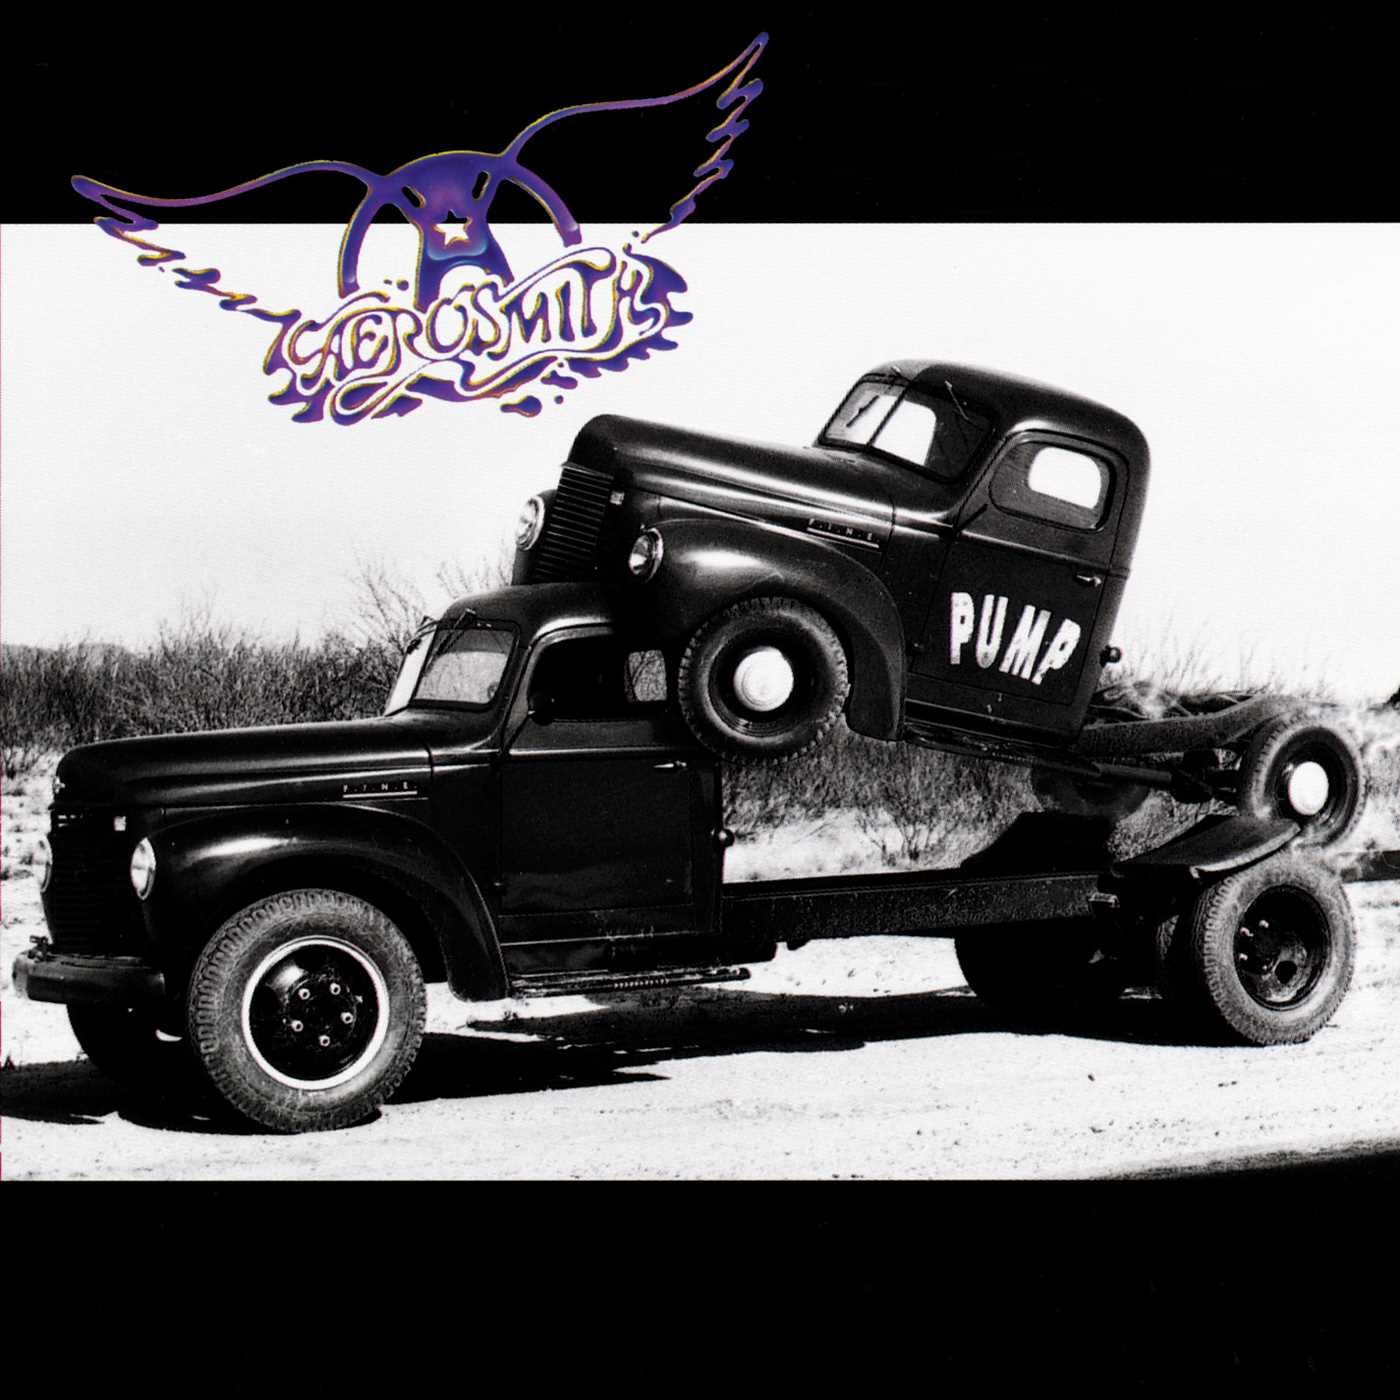 Pump | Aerosmith ‎ image0